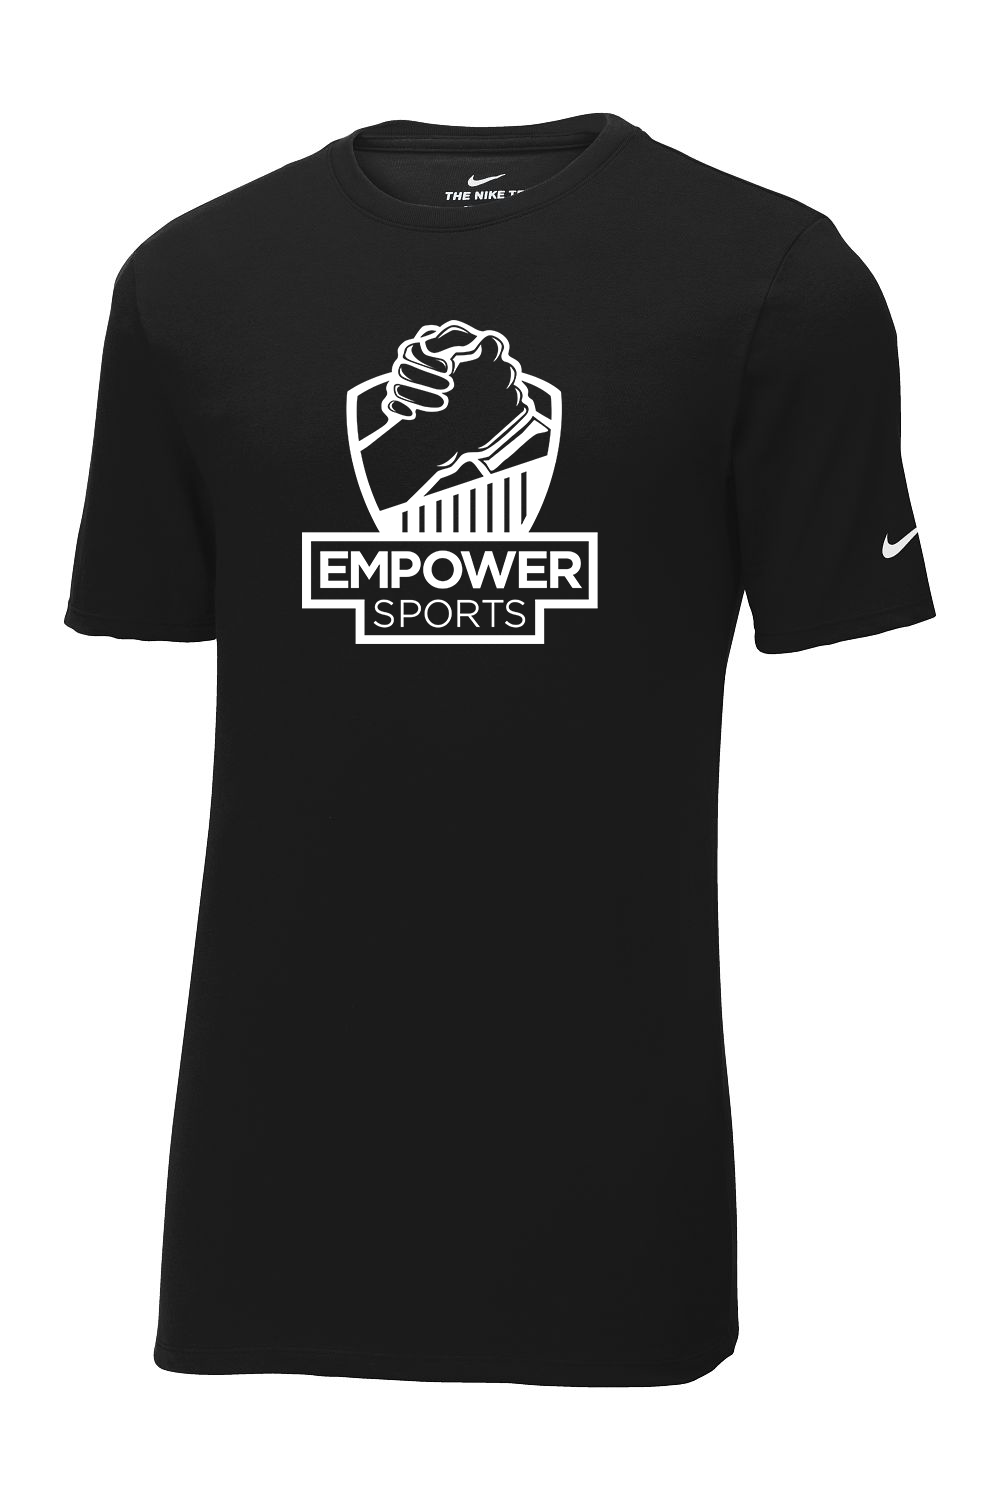 Nike Empower Logo T